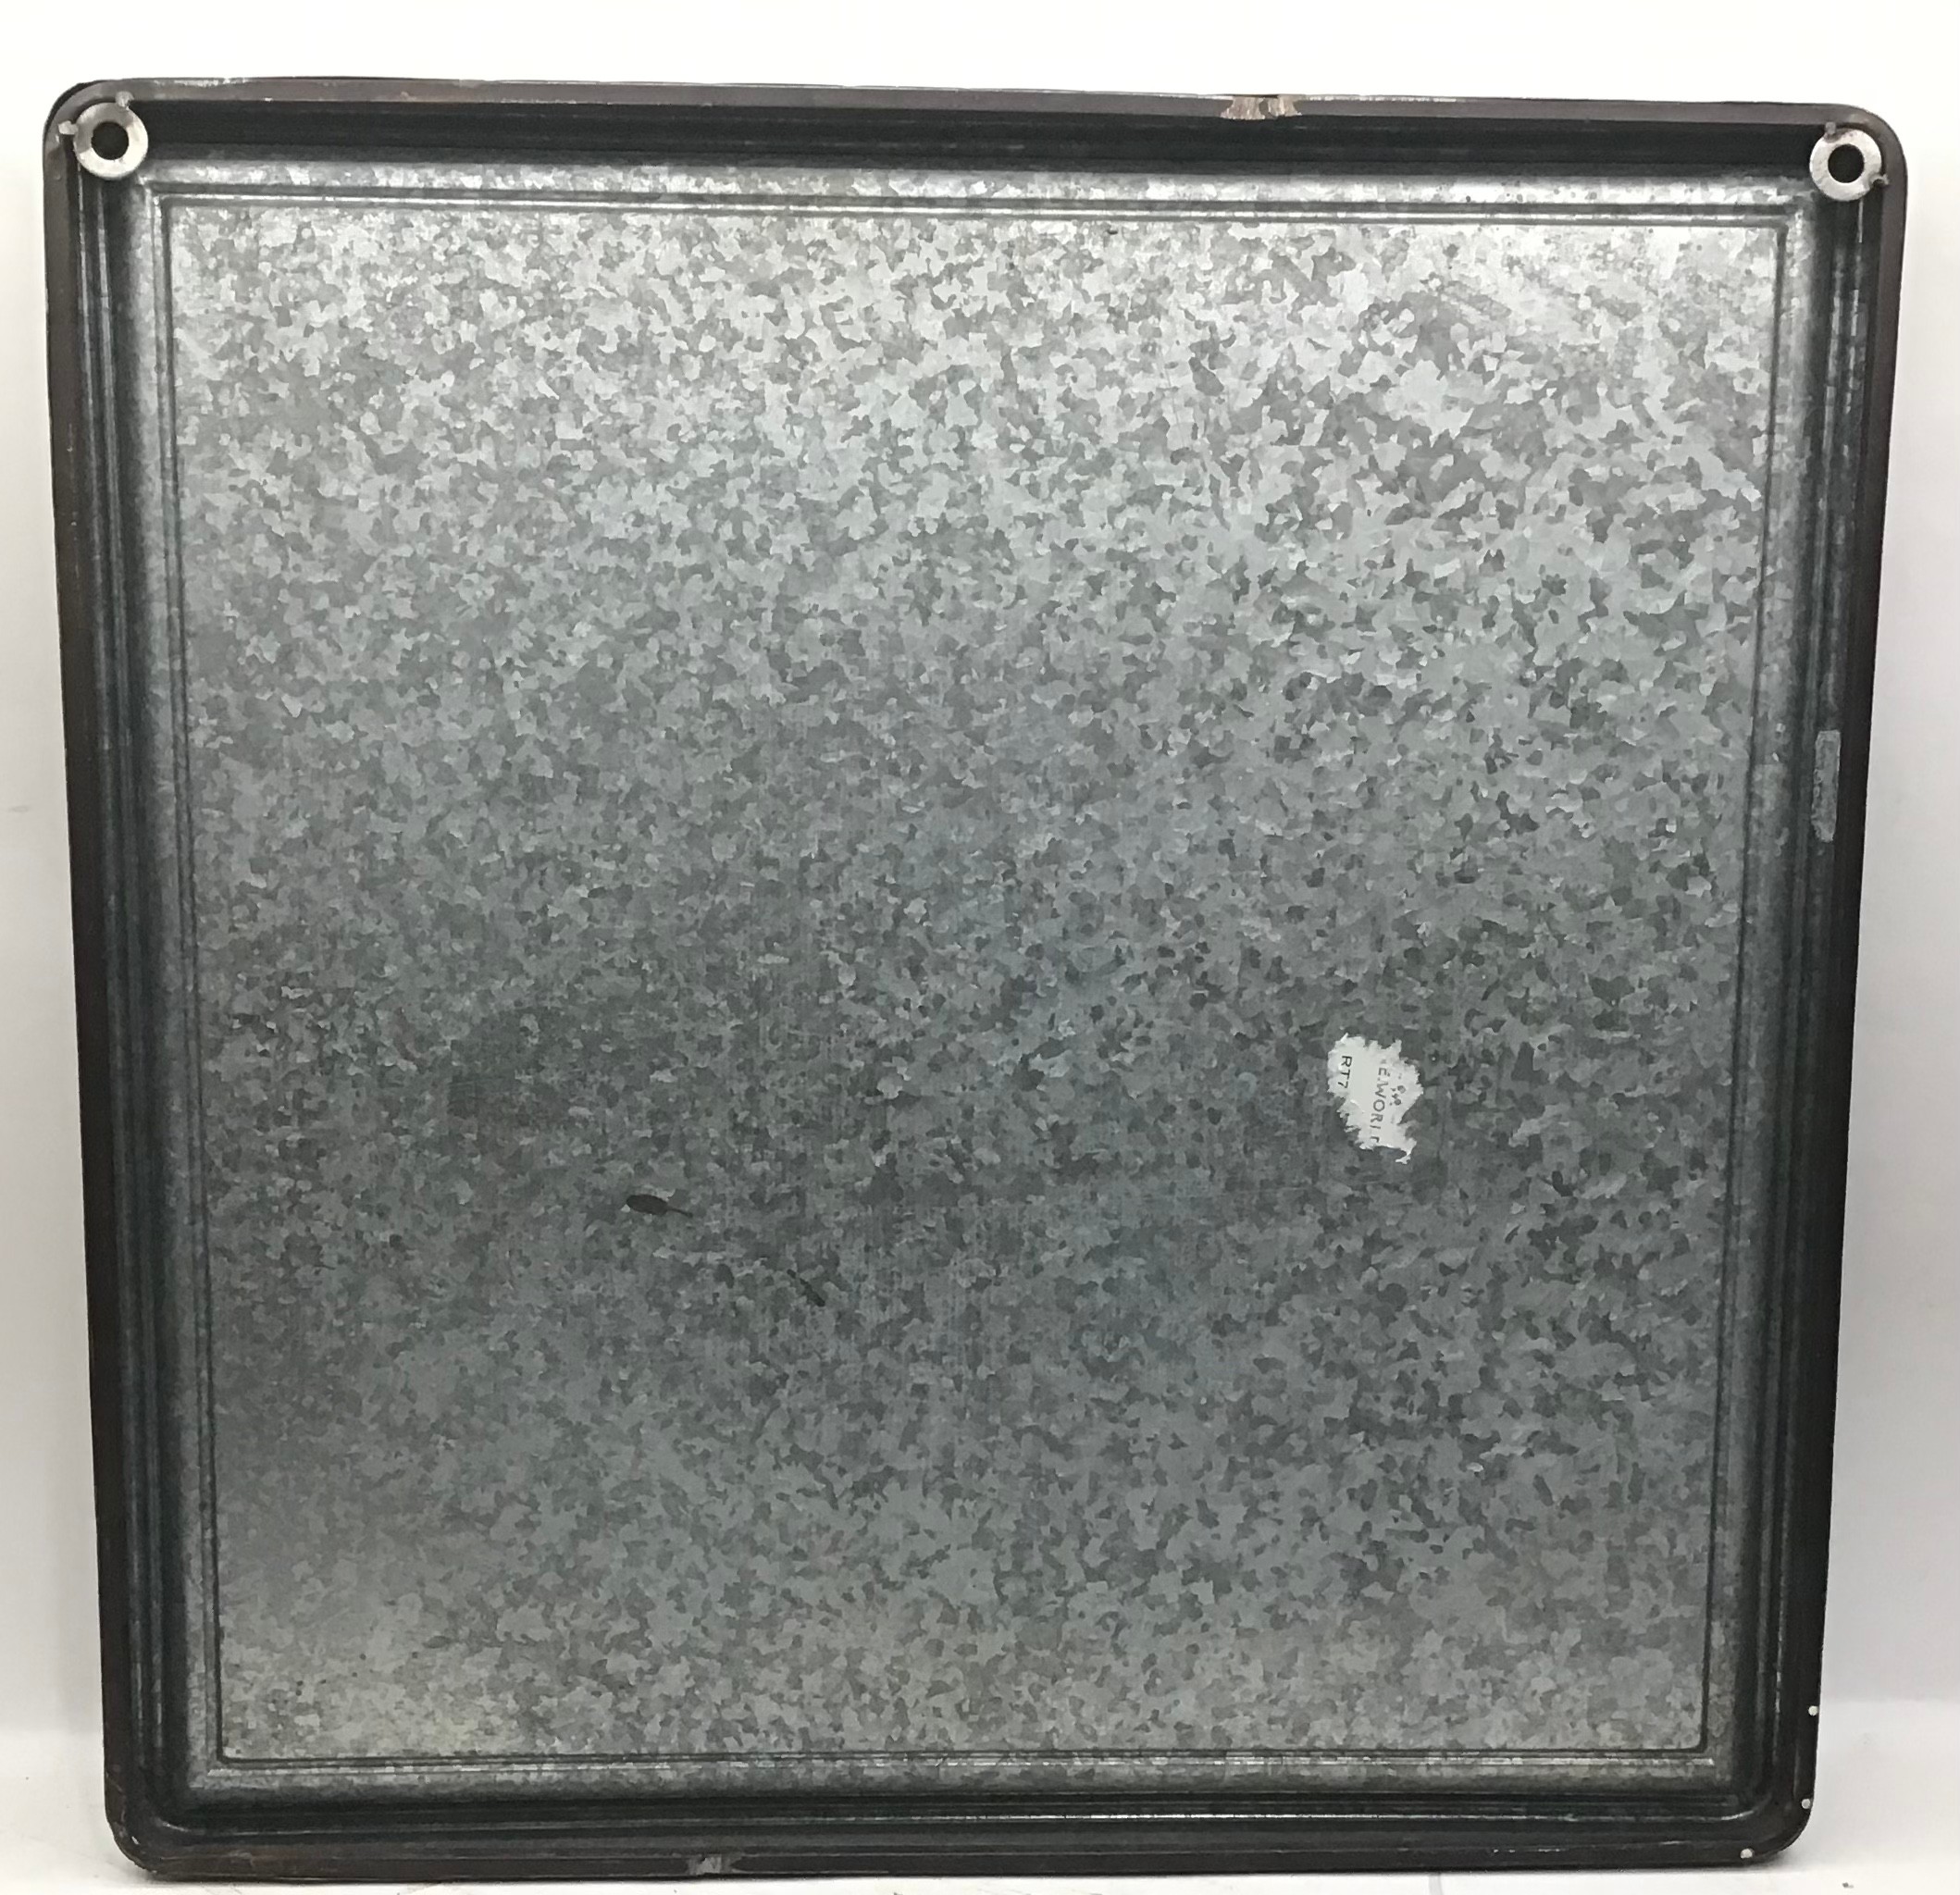 Galvanized metal mirror marked Mamod 65x65cm - Image 4 of 4